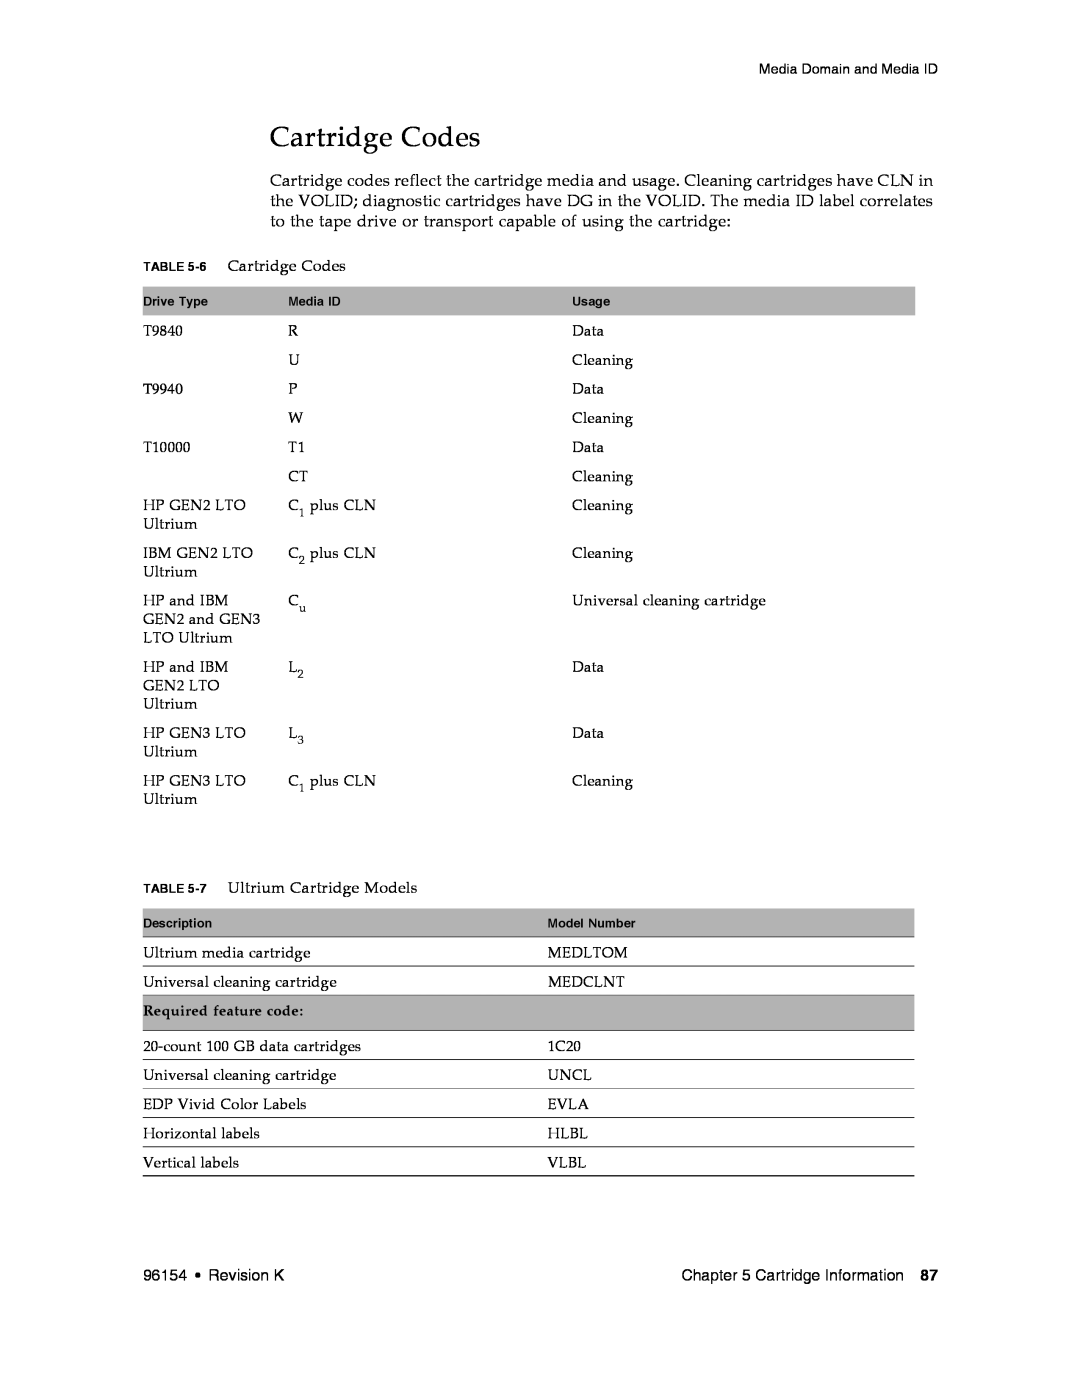 Sun Microsystems SL8500 manual 6 Cartridge Codes, 7 Ultrium Cartridge Models 